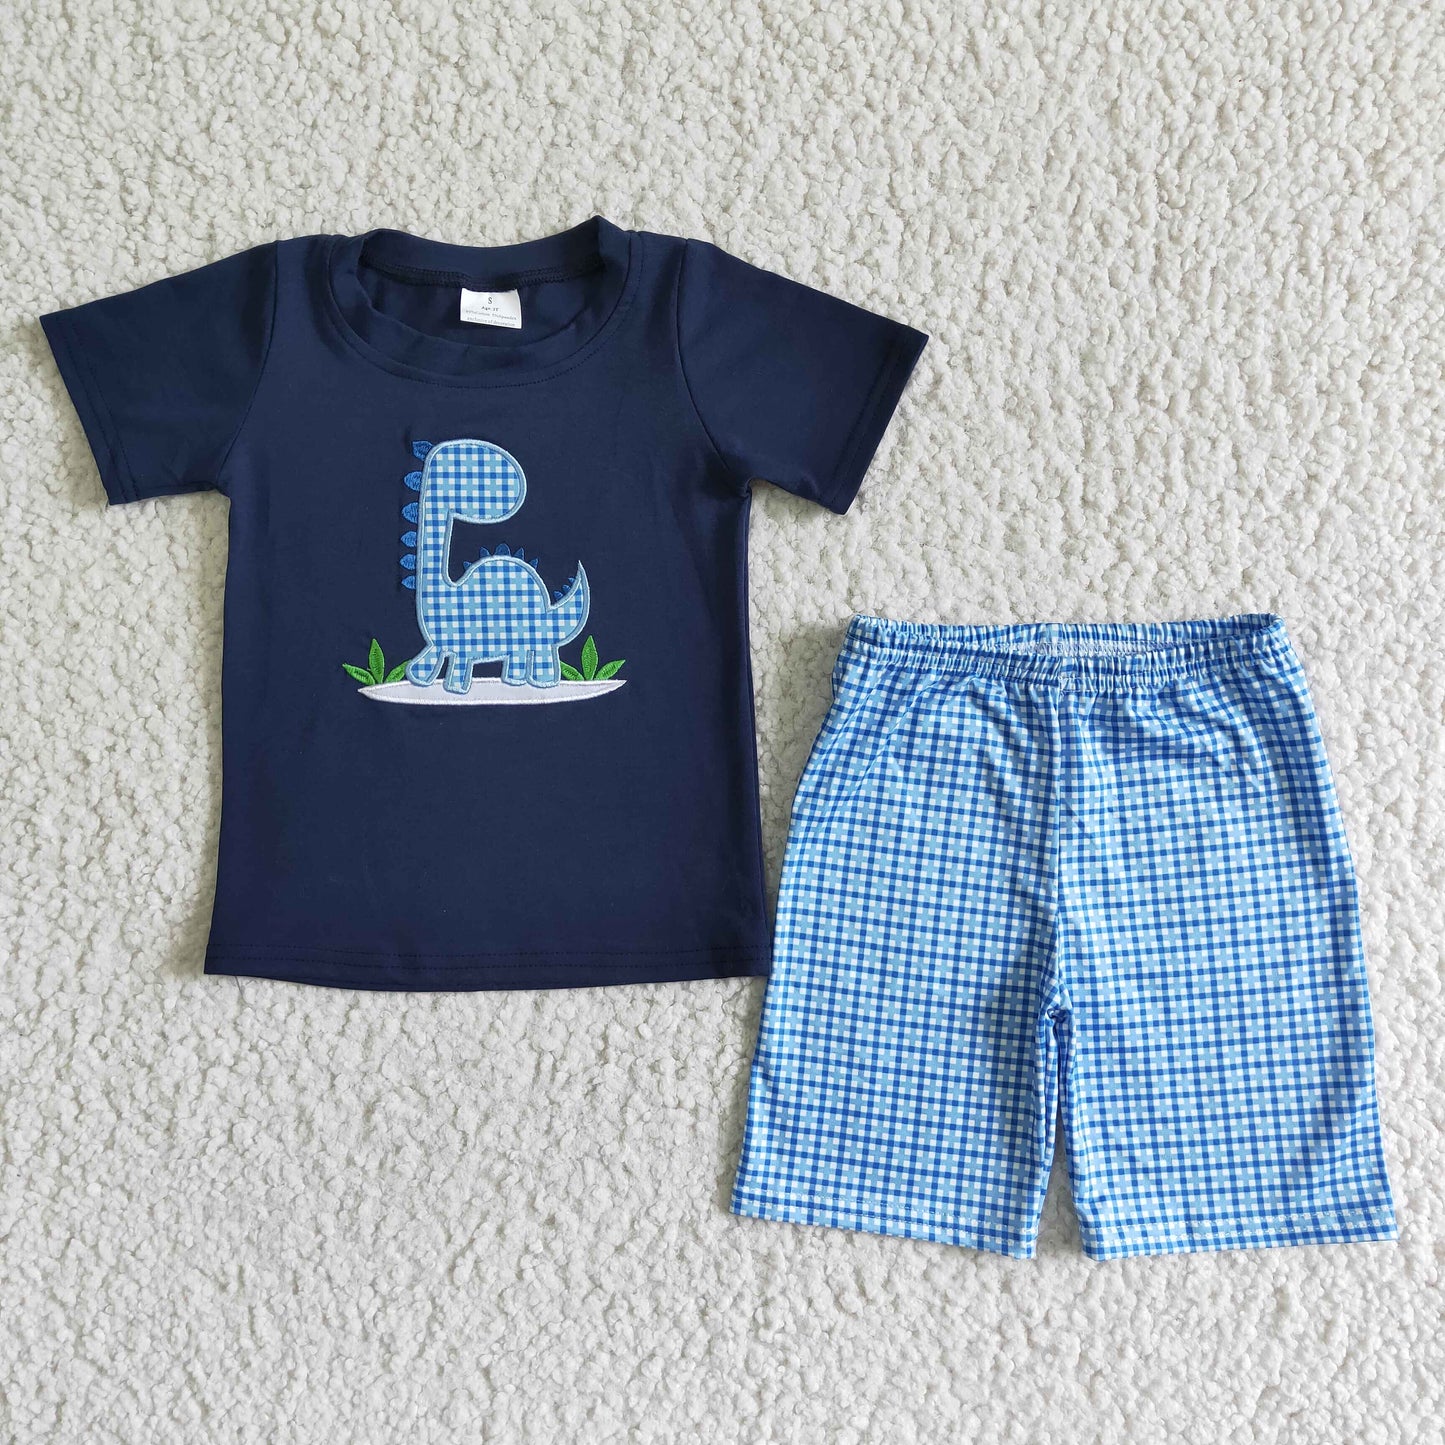 Dinosaur embroidery boy summer clothing set